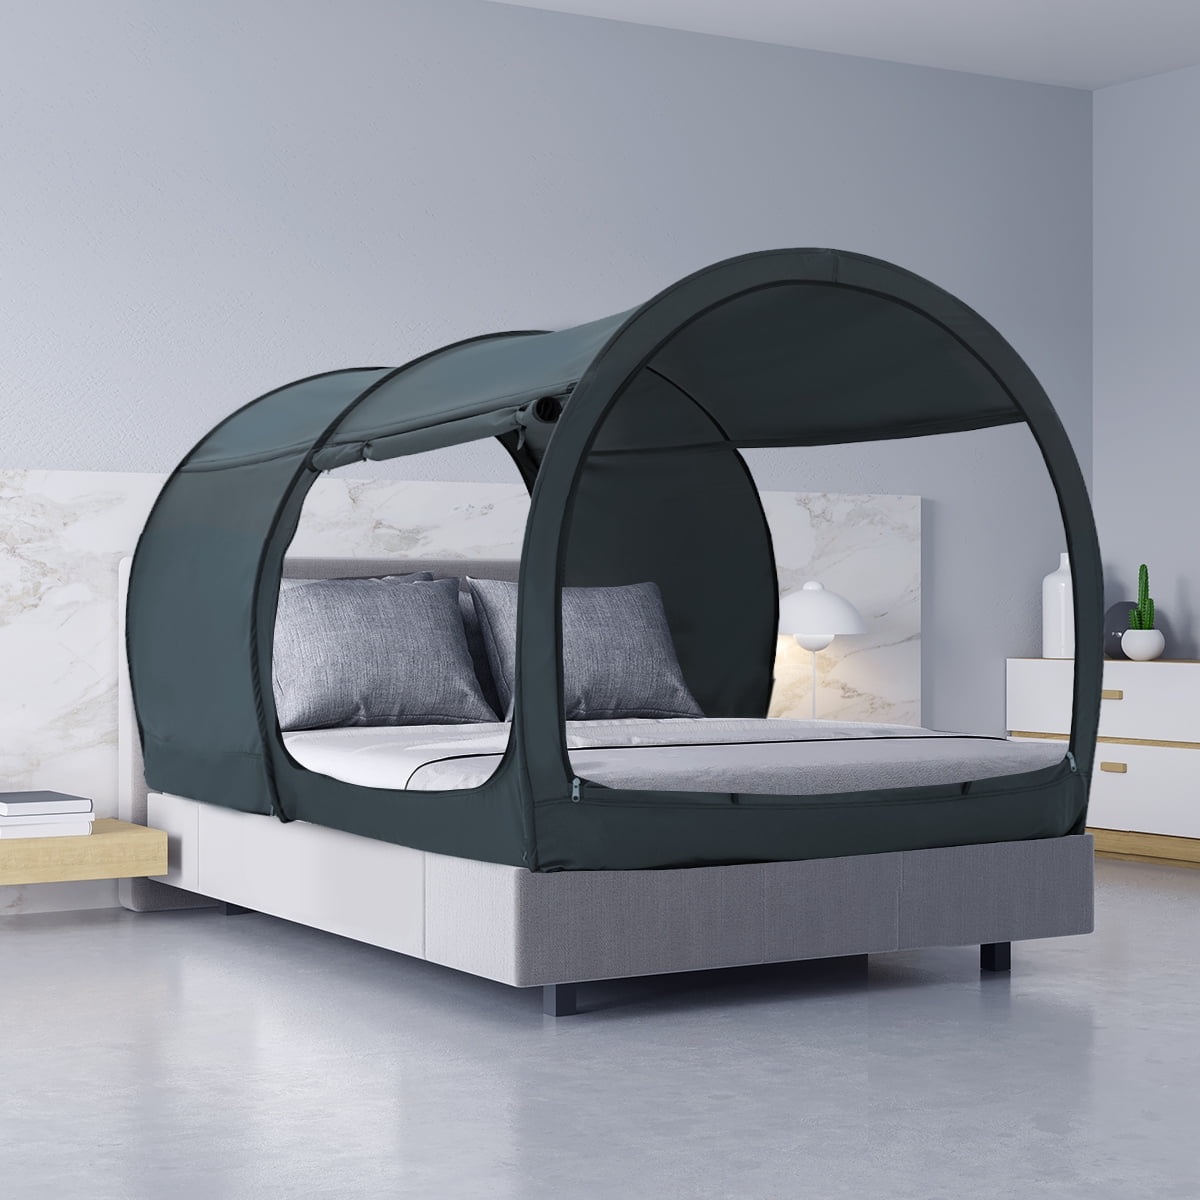 Alvantor Bed Tent Pop Up Canopy, Twin Bunk Bed Canopy